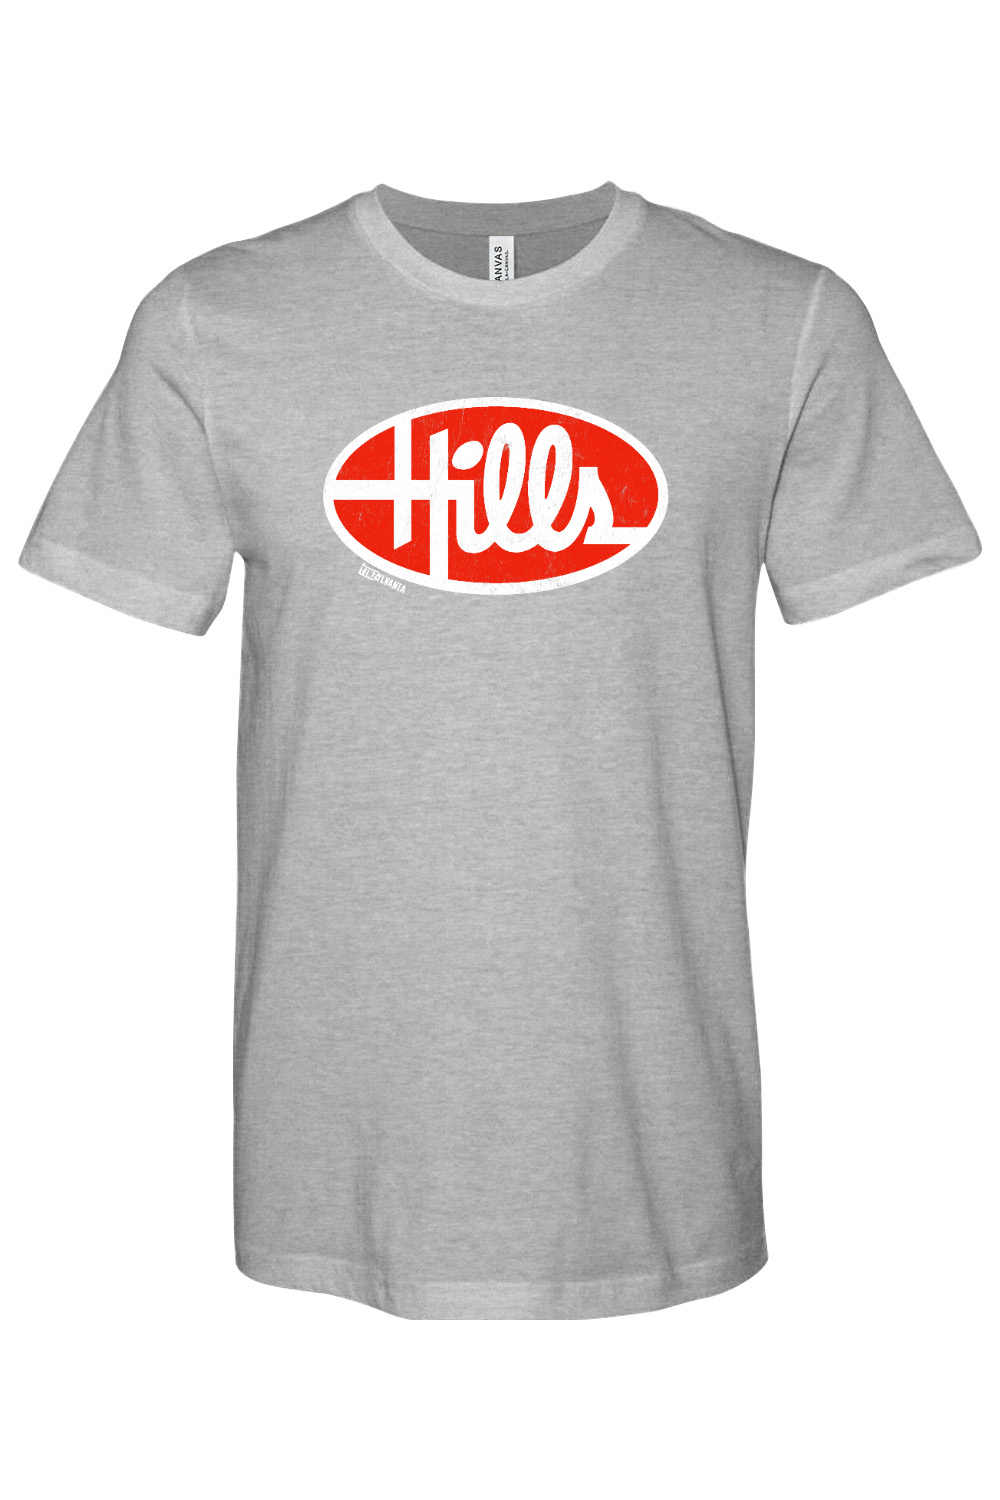 Hills retro logo - Bella + Canvas Heathered Jersey Tee - Yinzylvania